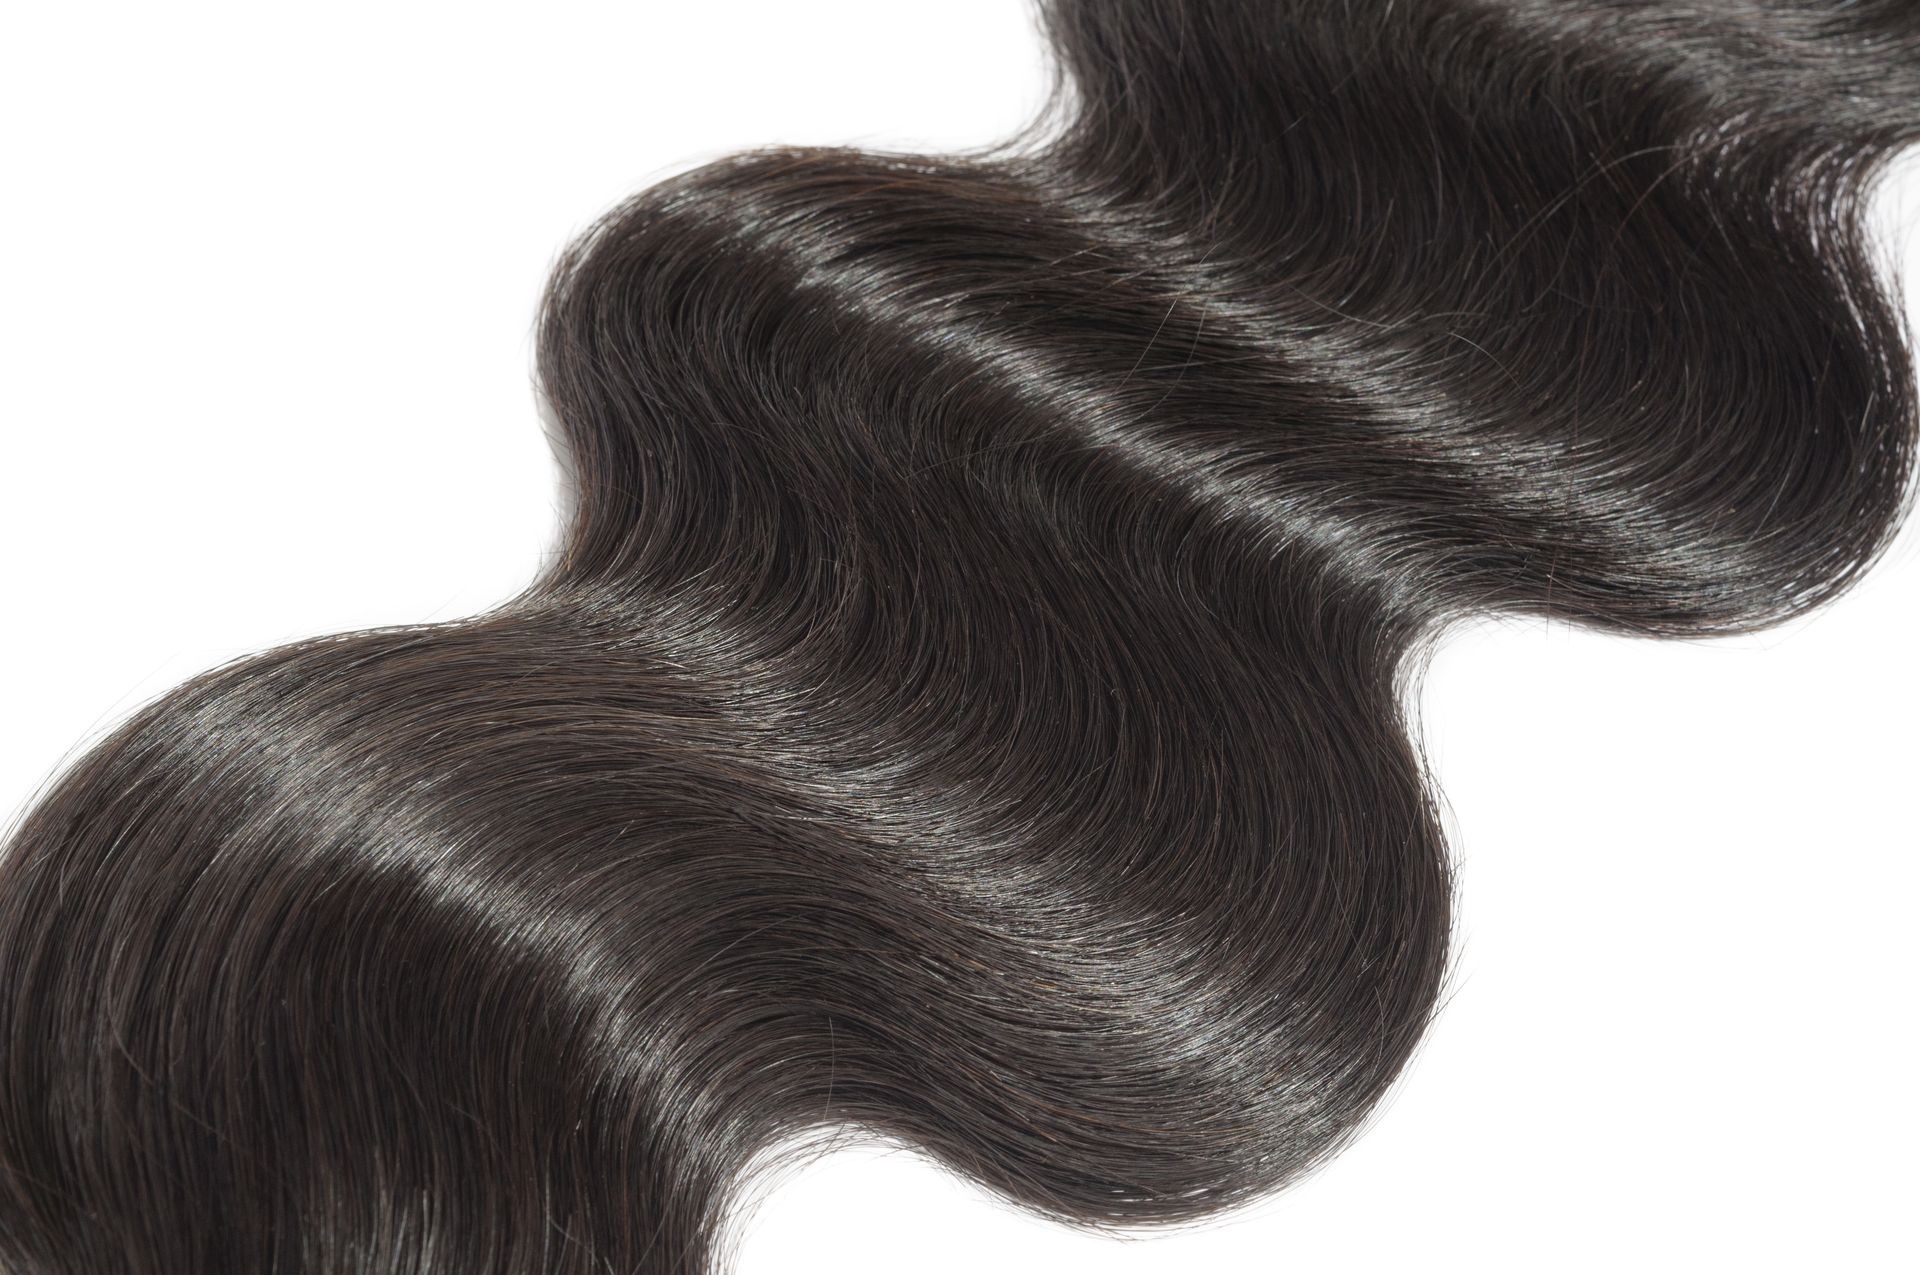 Body wavy black human hair weave extensions bundle